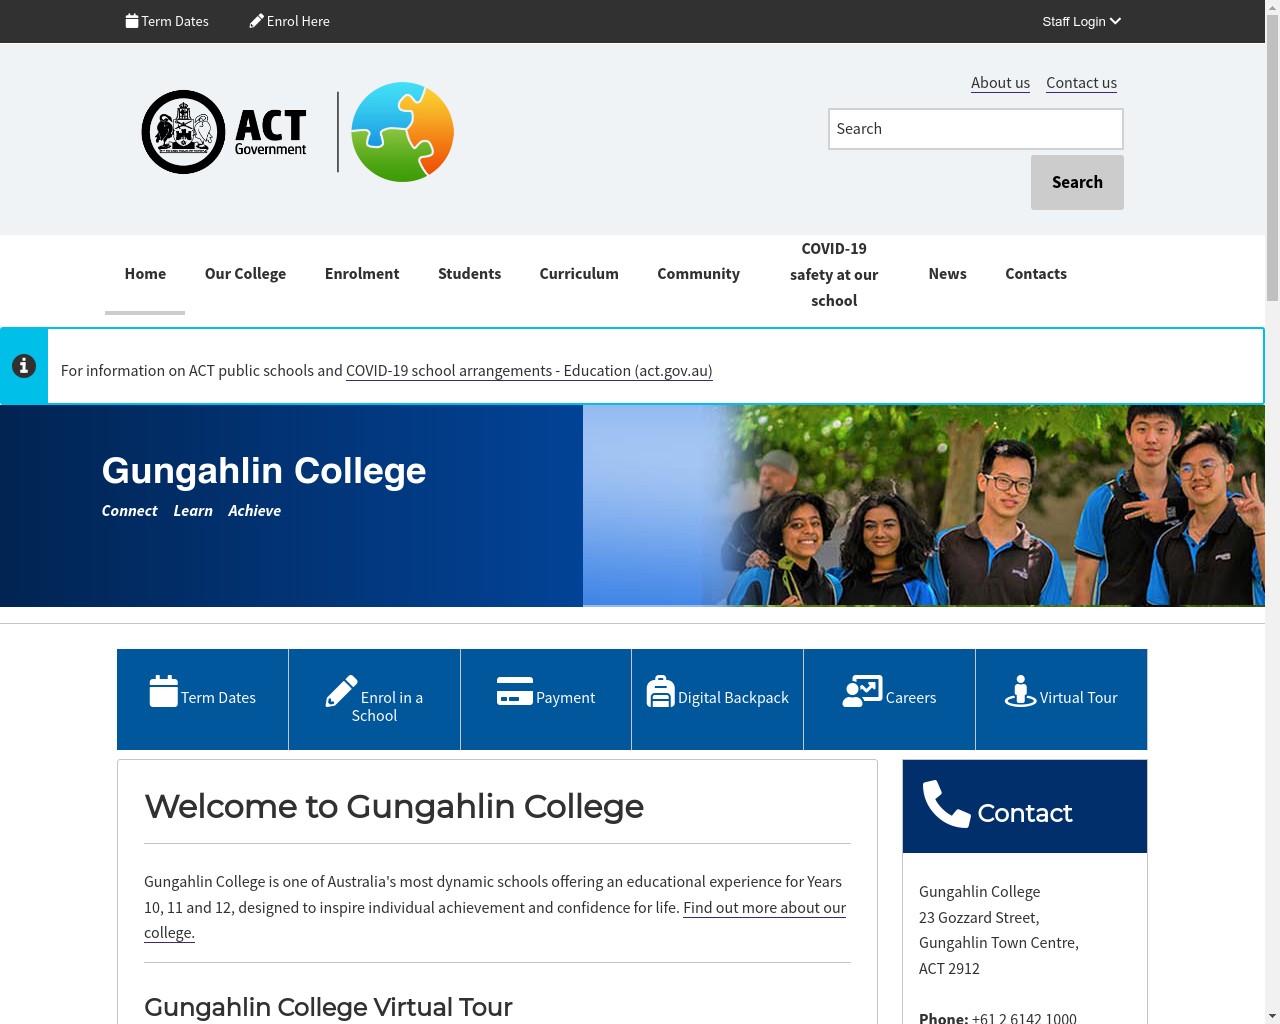 Gungahlin College